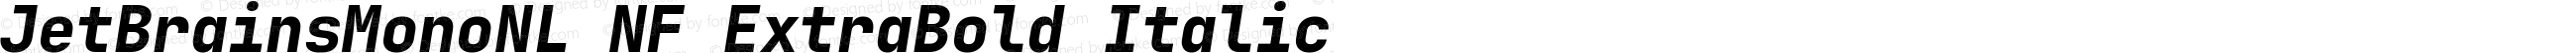 JetBrains Mono NL ExtraBold Italic Nerd Font Complete Windows Compatible